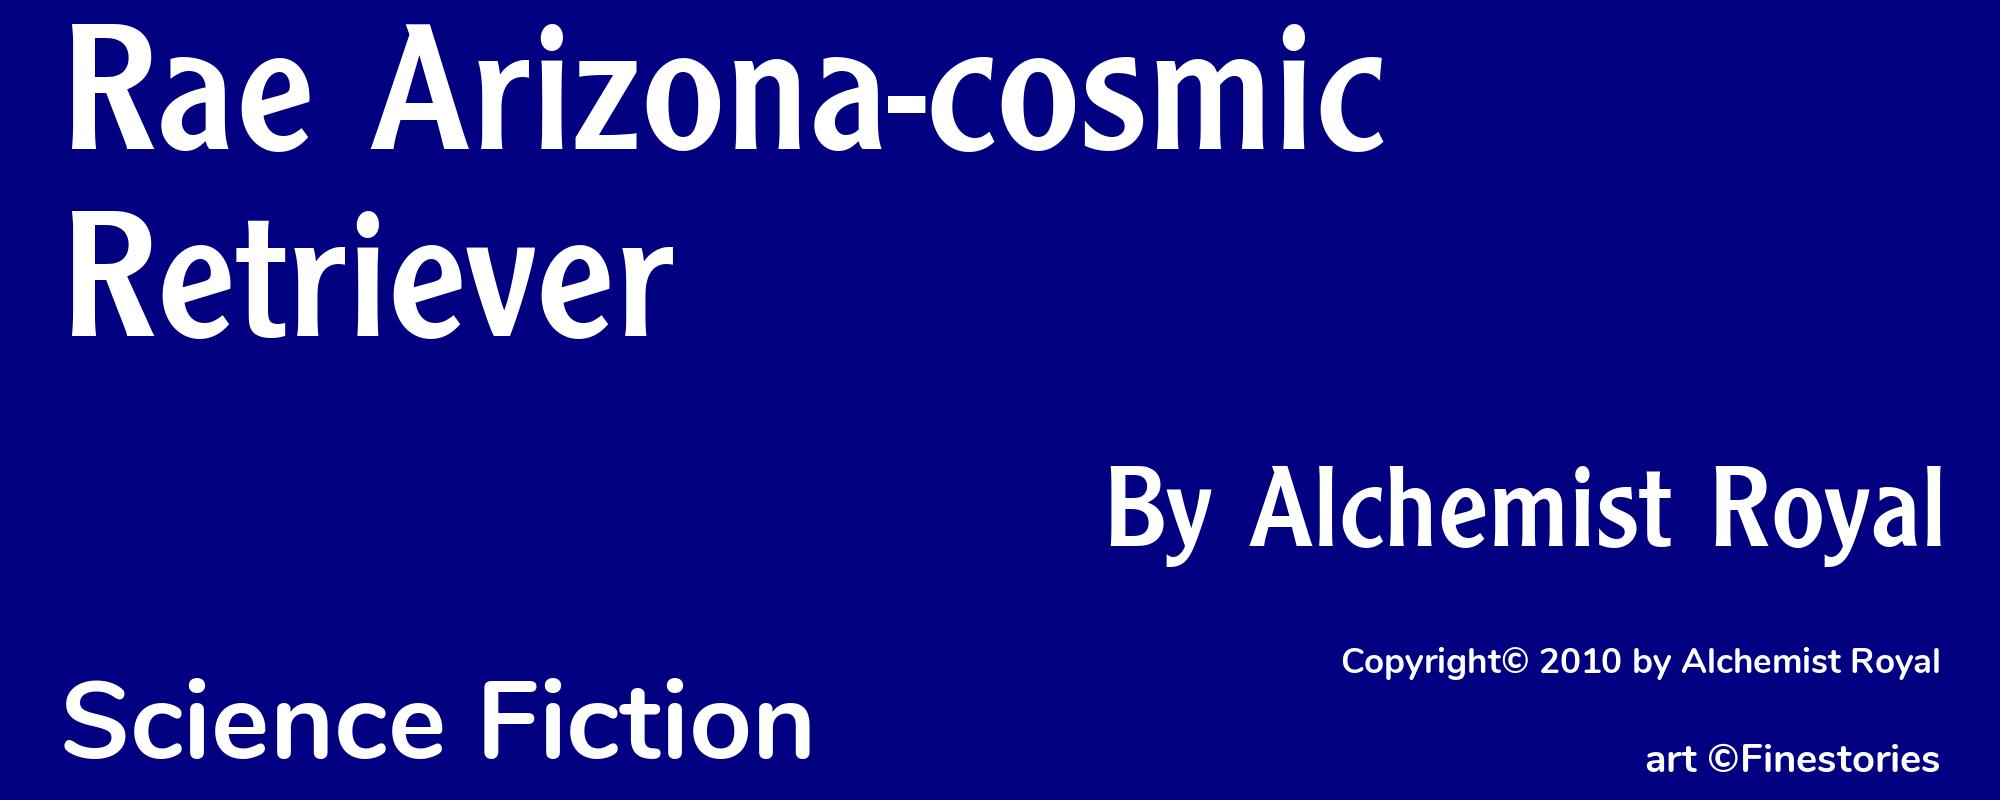 Rae Arizona-cosmic Retriever - Cover